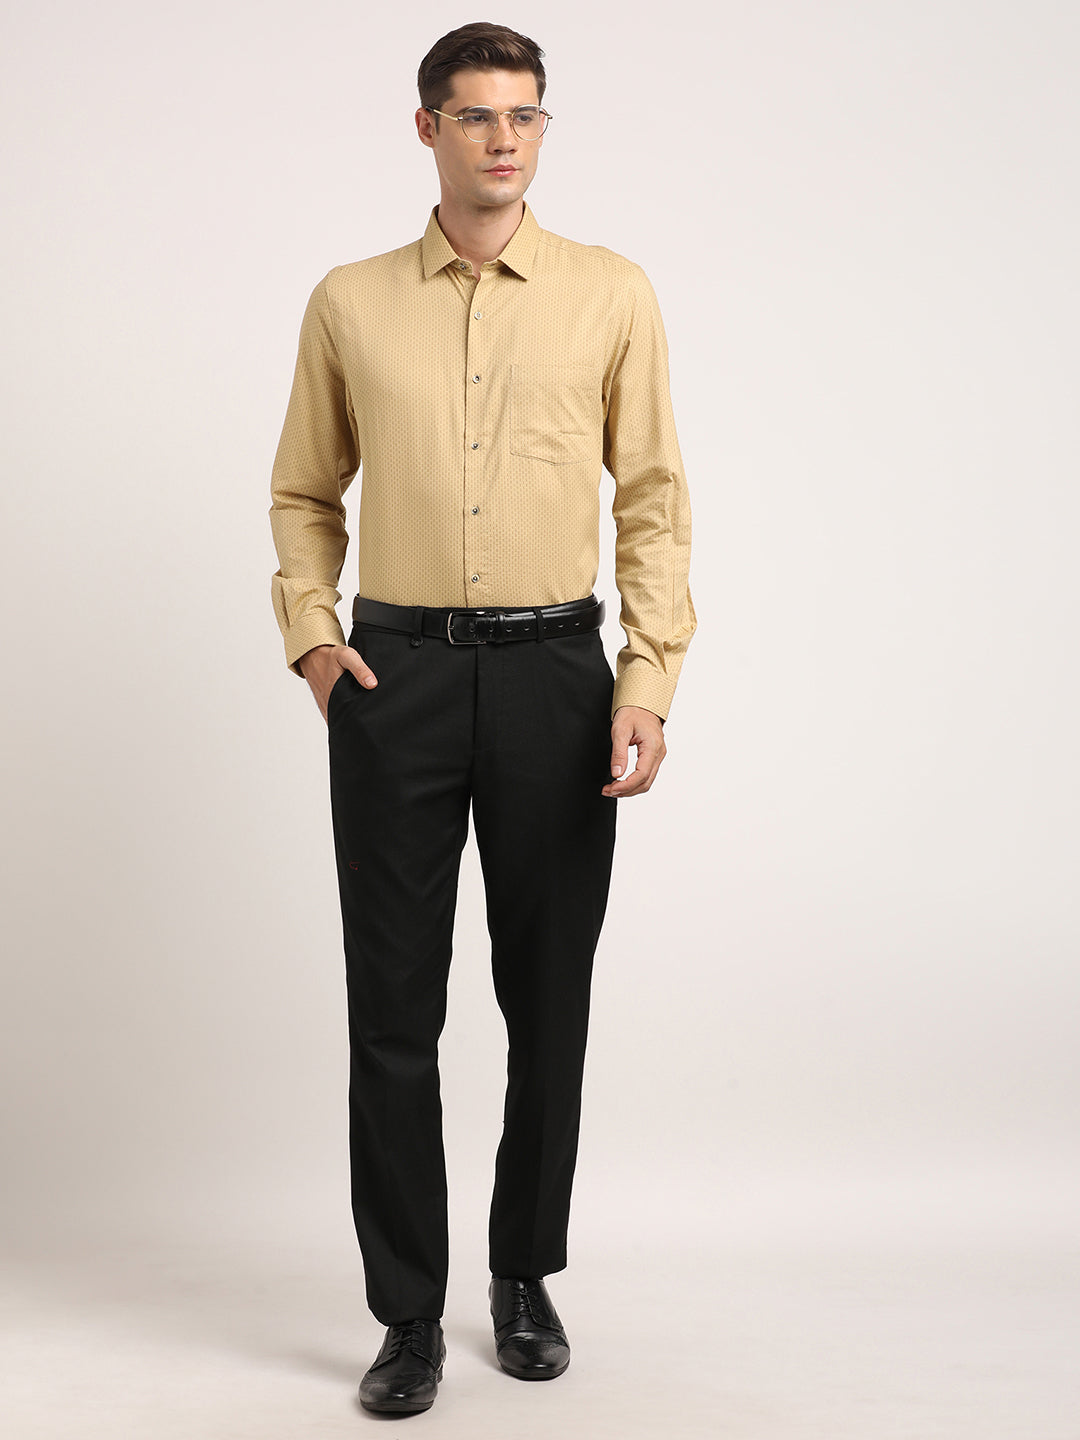 Cotton Tencel Khaki Printed Slim Fit Full Sleeve Formal Shirt